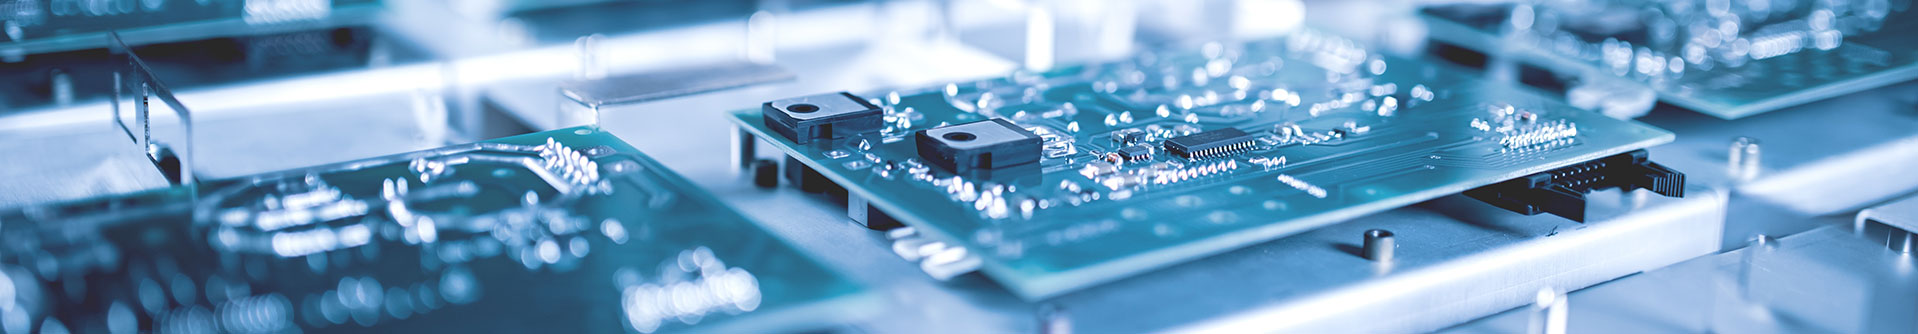 mounted circuit boards, closeup